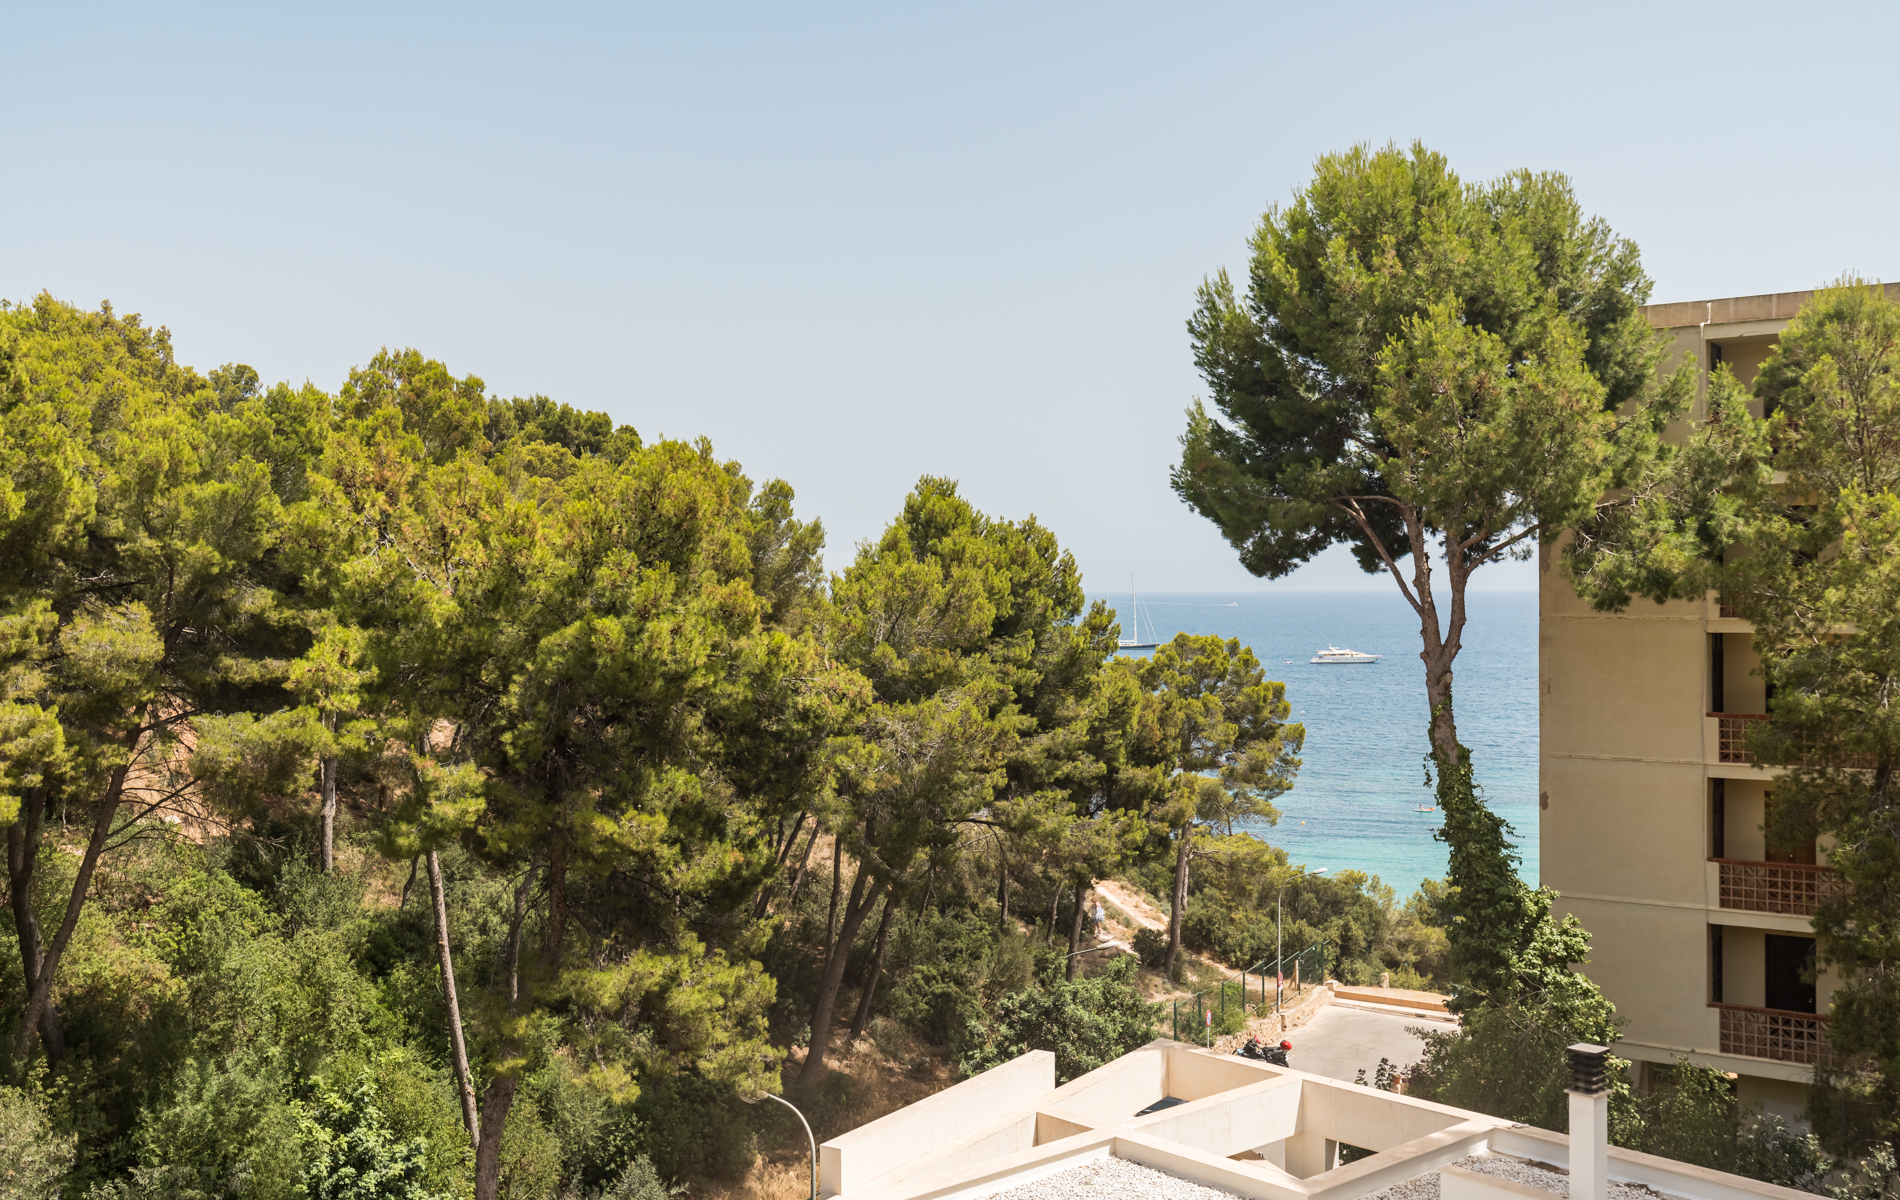 Mediterranean style villa close to the beach & Portals Nous village